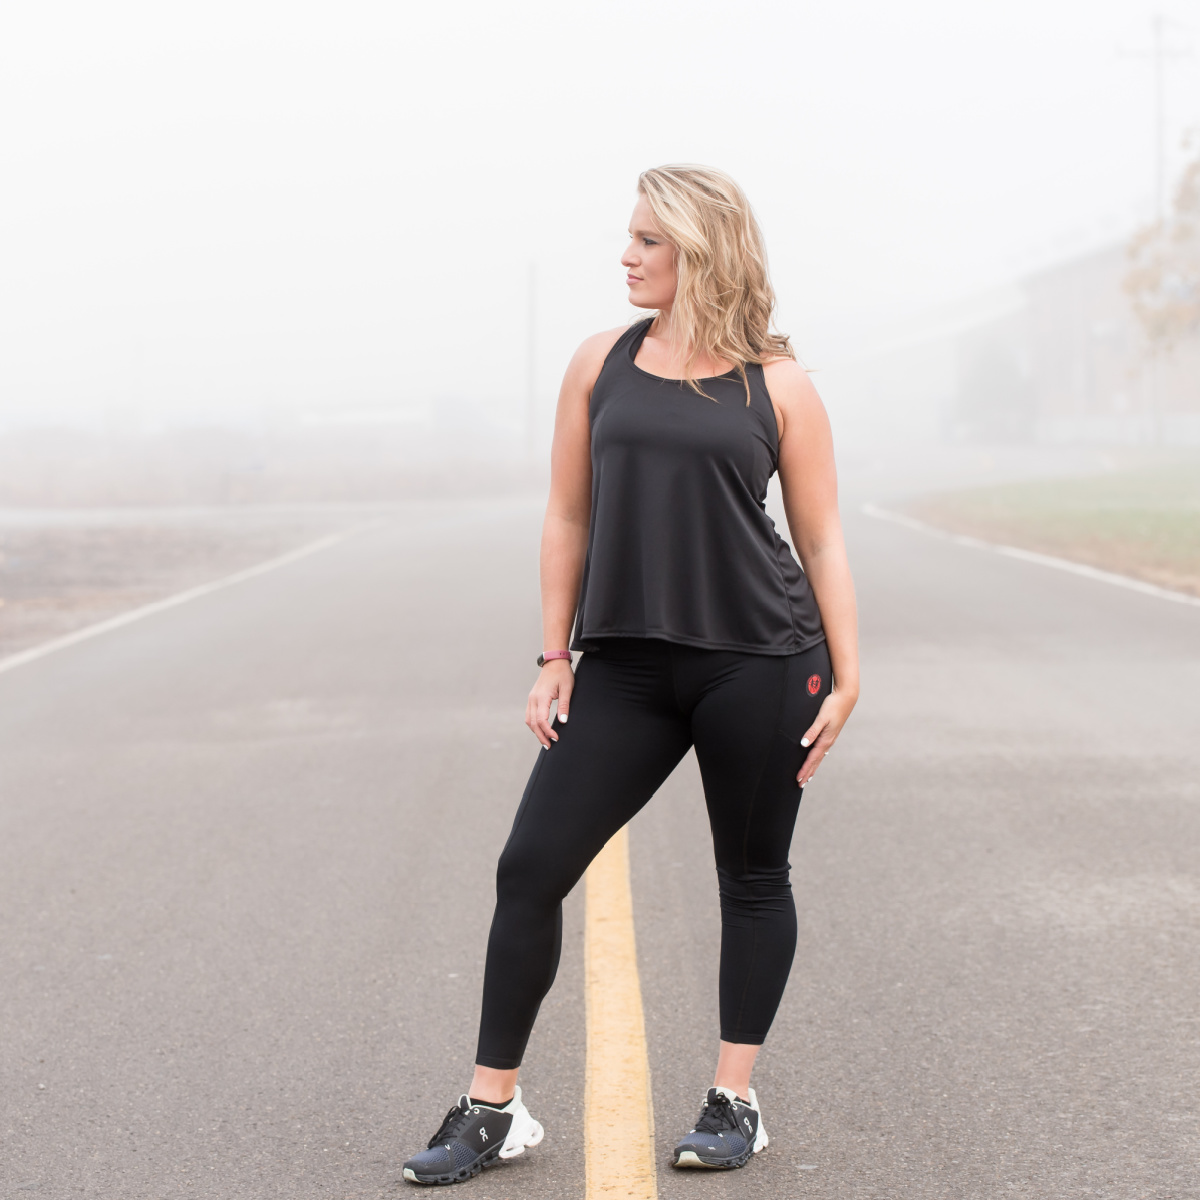 Woman wearing a black workout tank top and black leggings